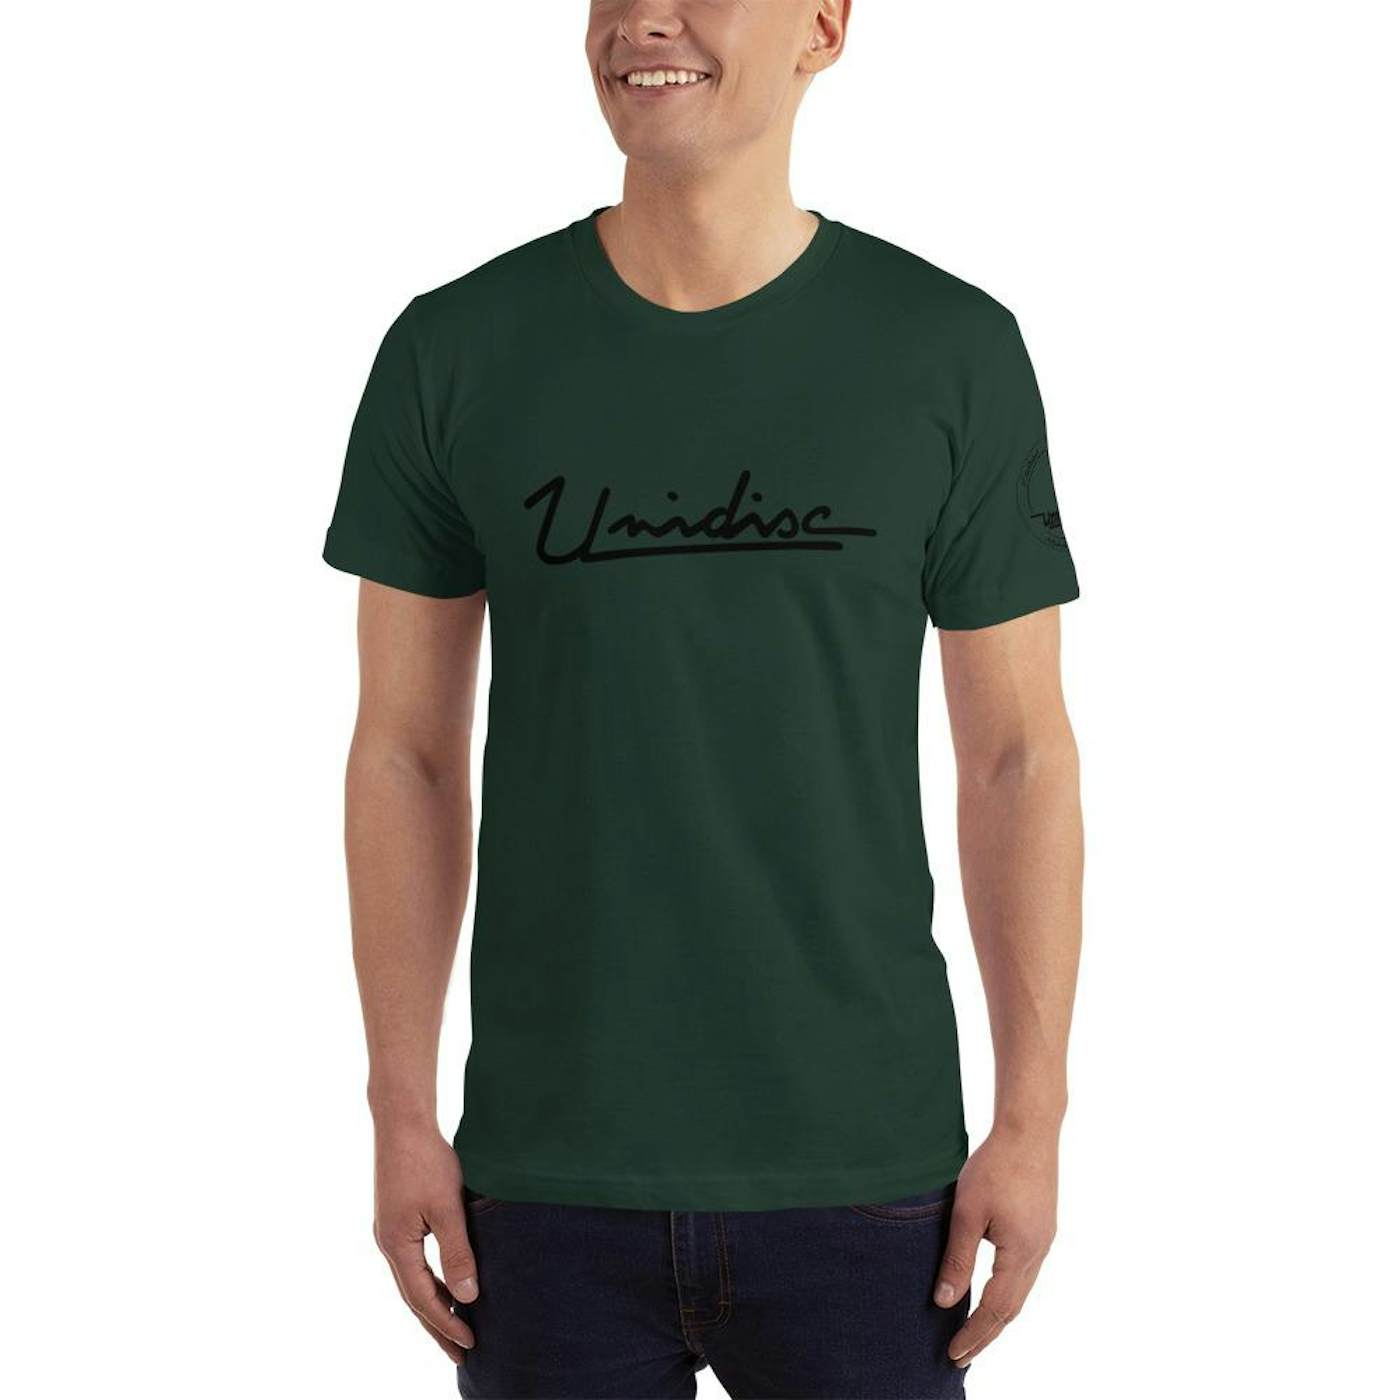 suffix serviet spejder Unidisc Music Unidisc T-Shirt